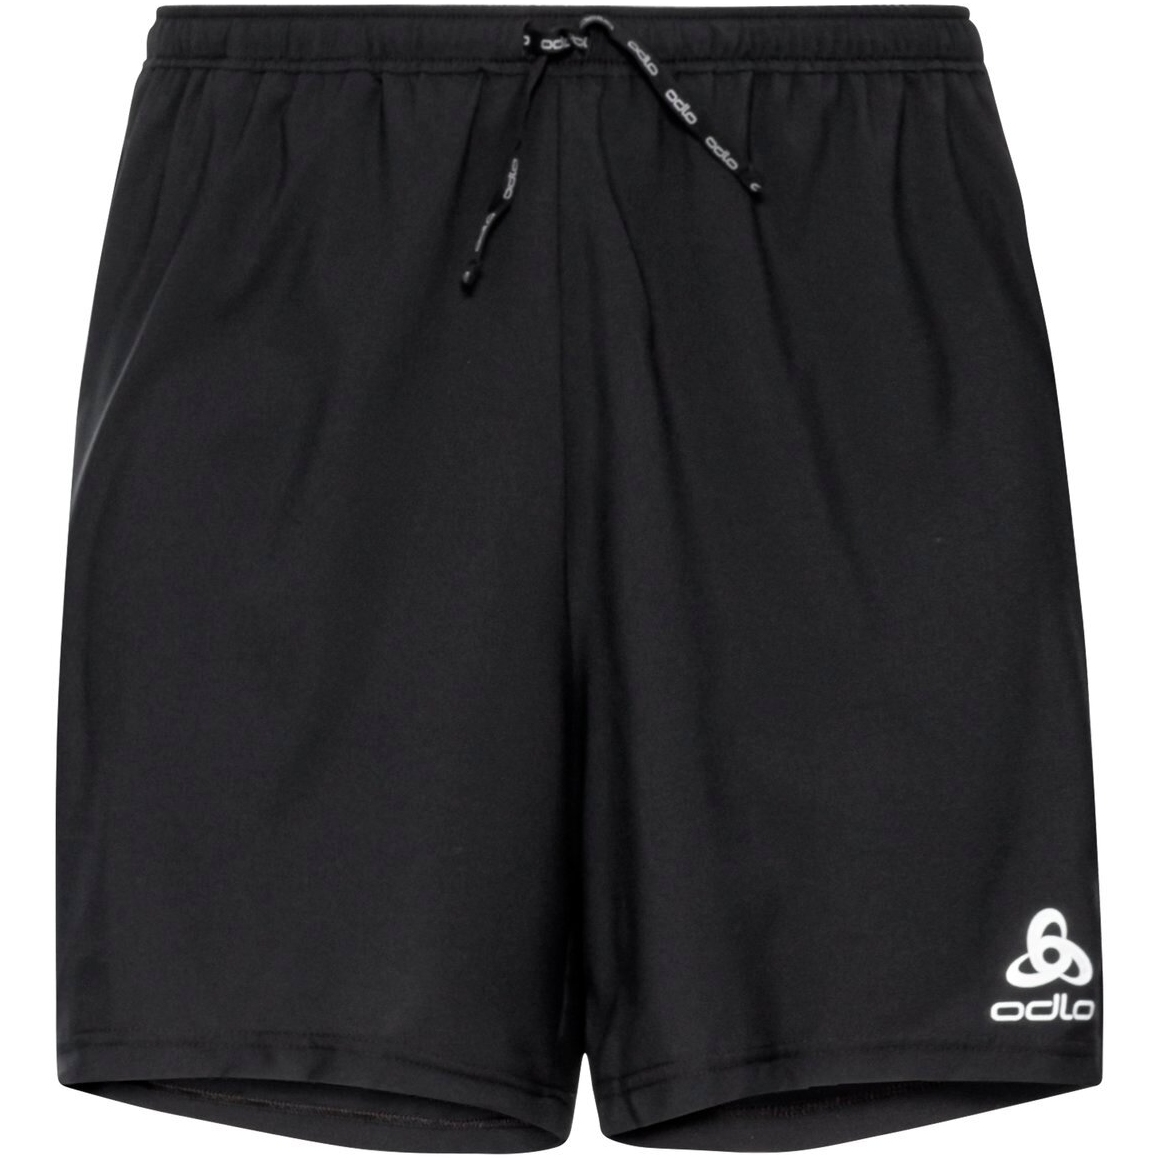 Image of Odlo Essential 6 Inch Running Shorts Men - black